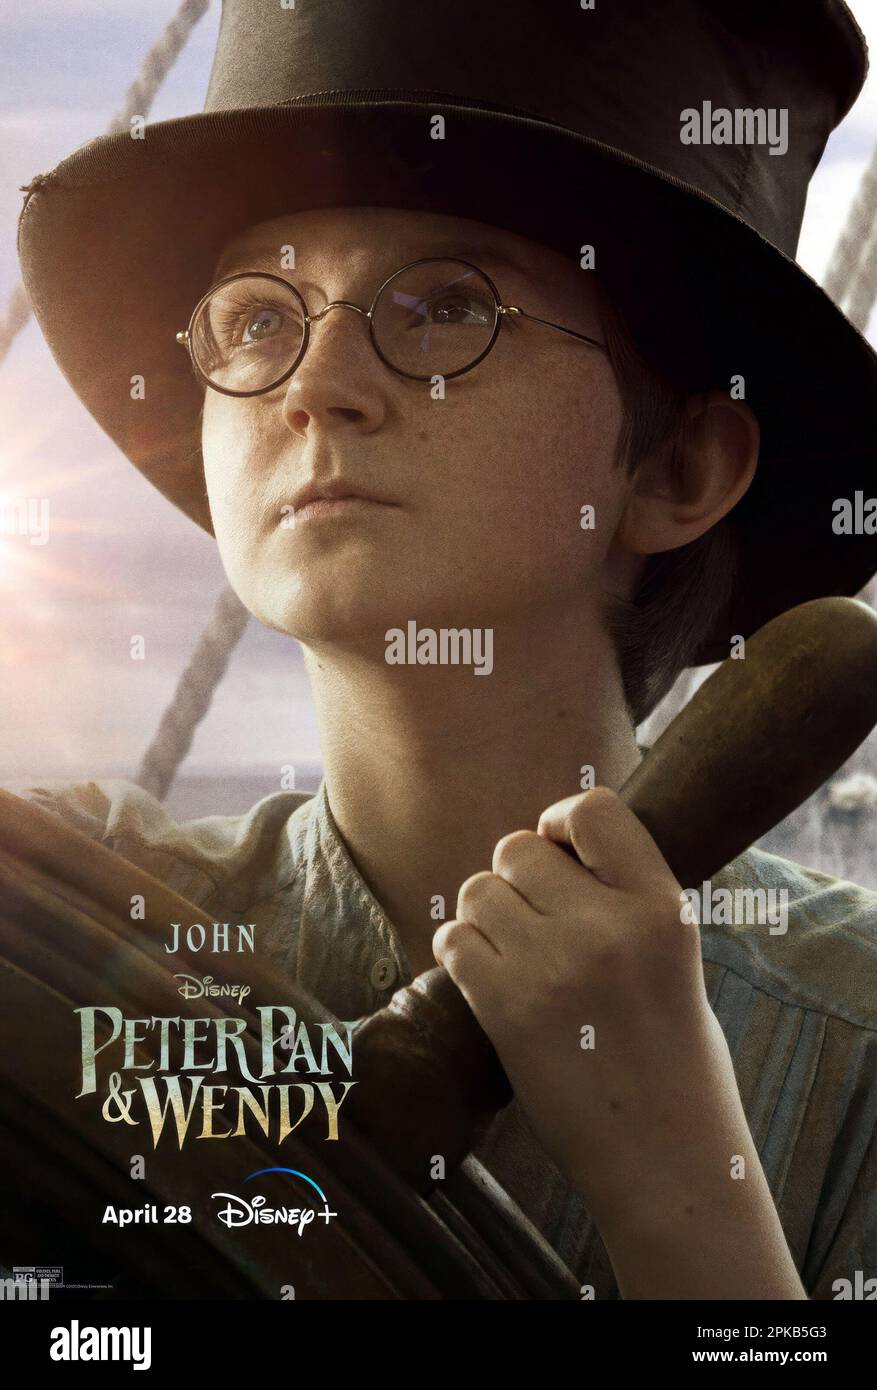 PETER PAN & WENDY, (aka PETER PAN AND WENDY), US character poster